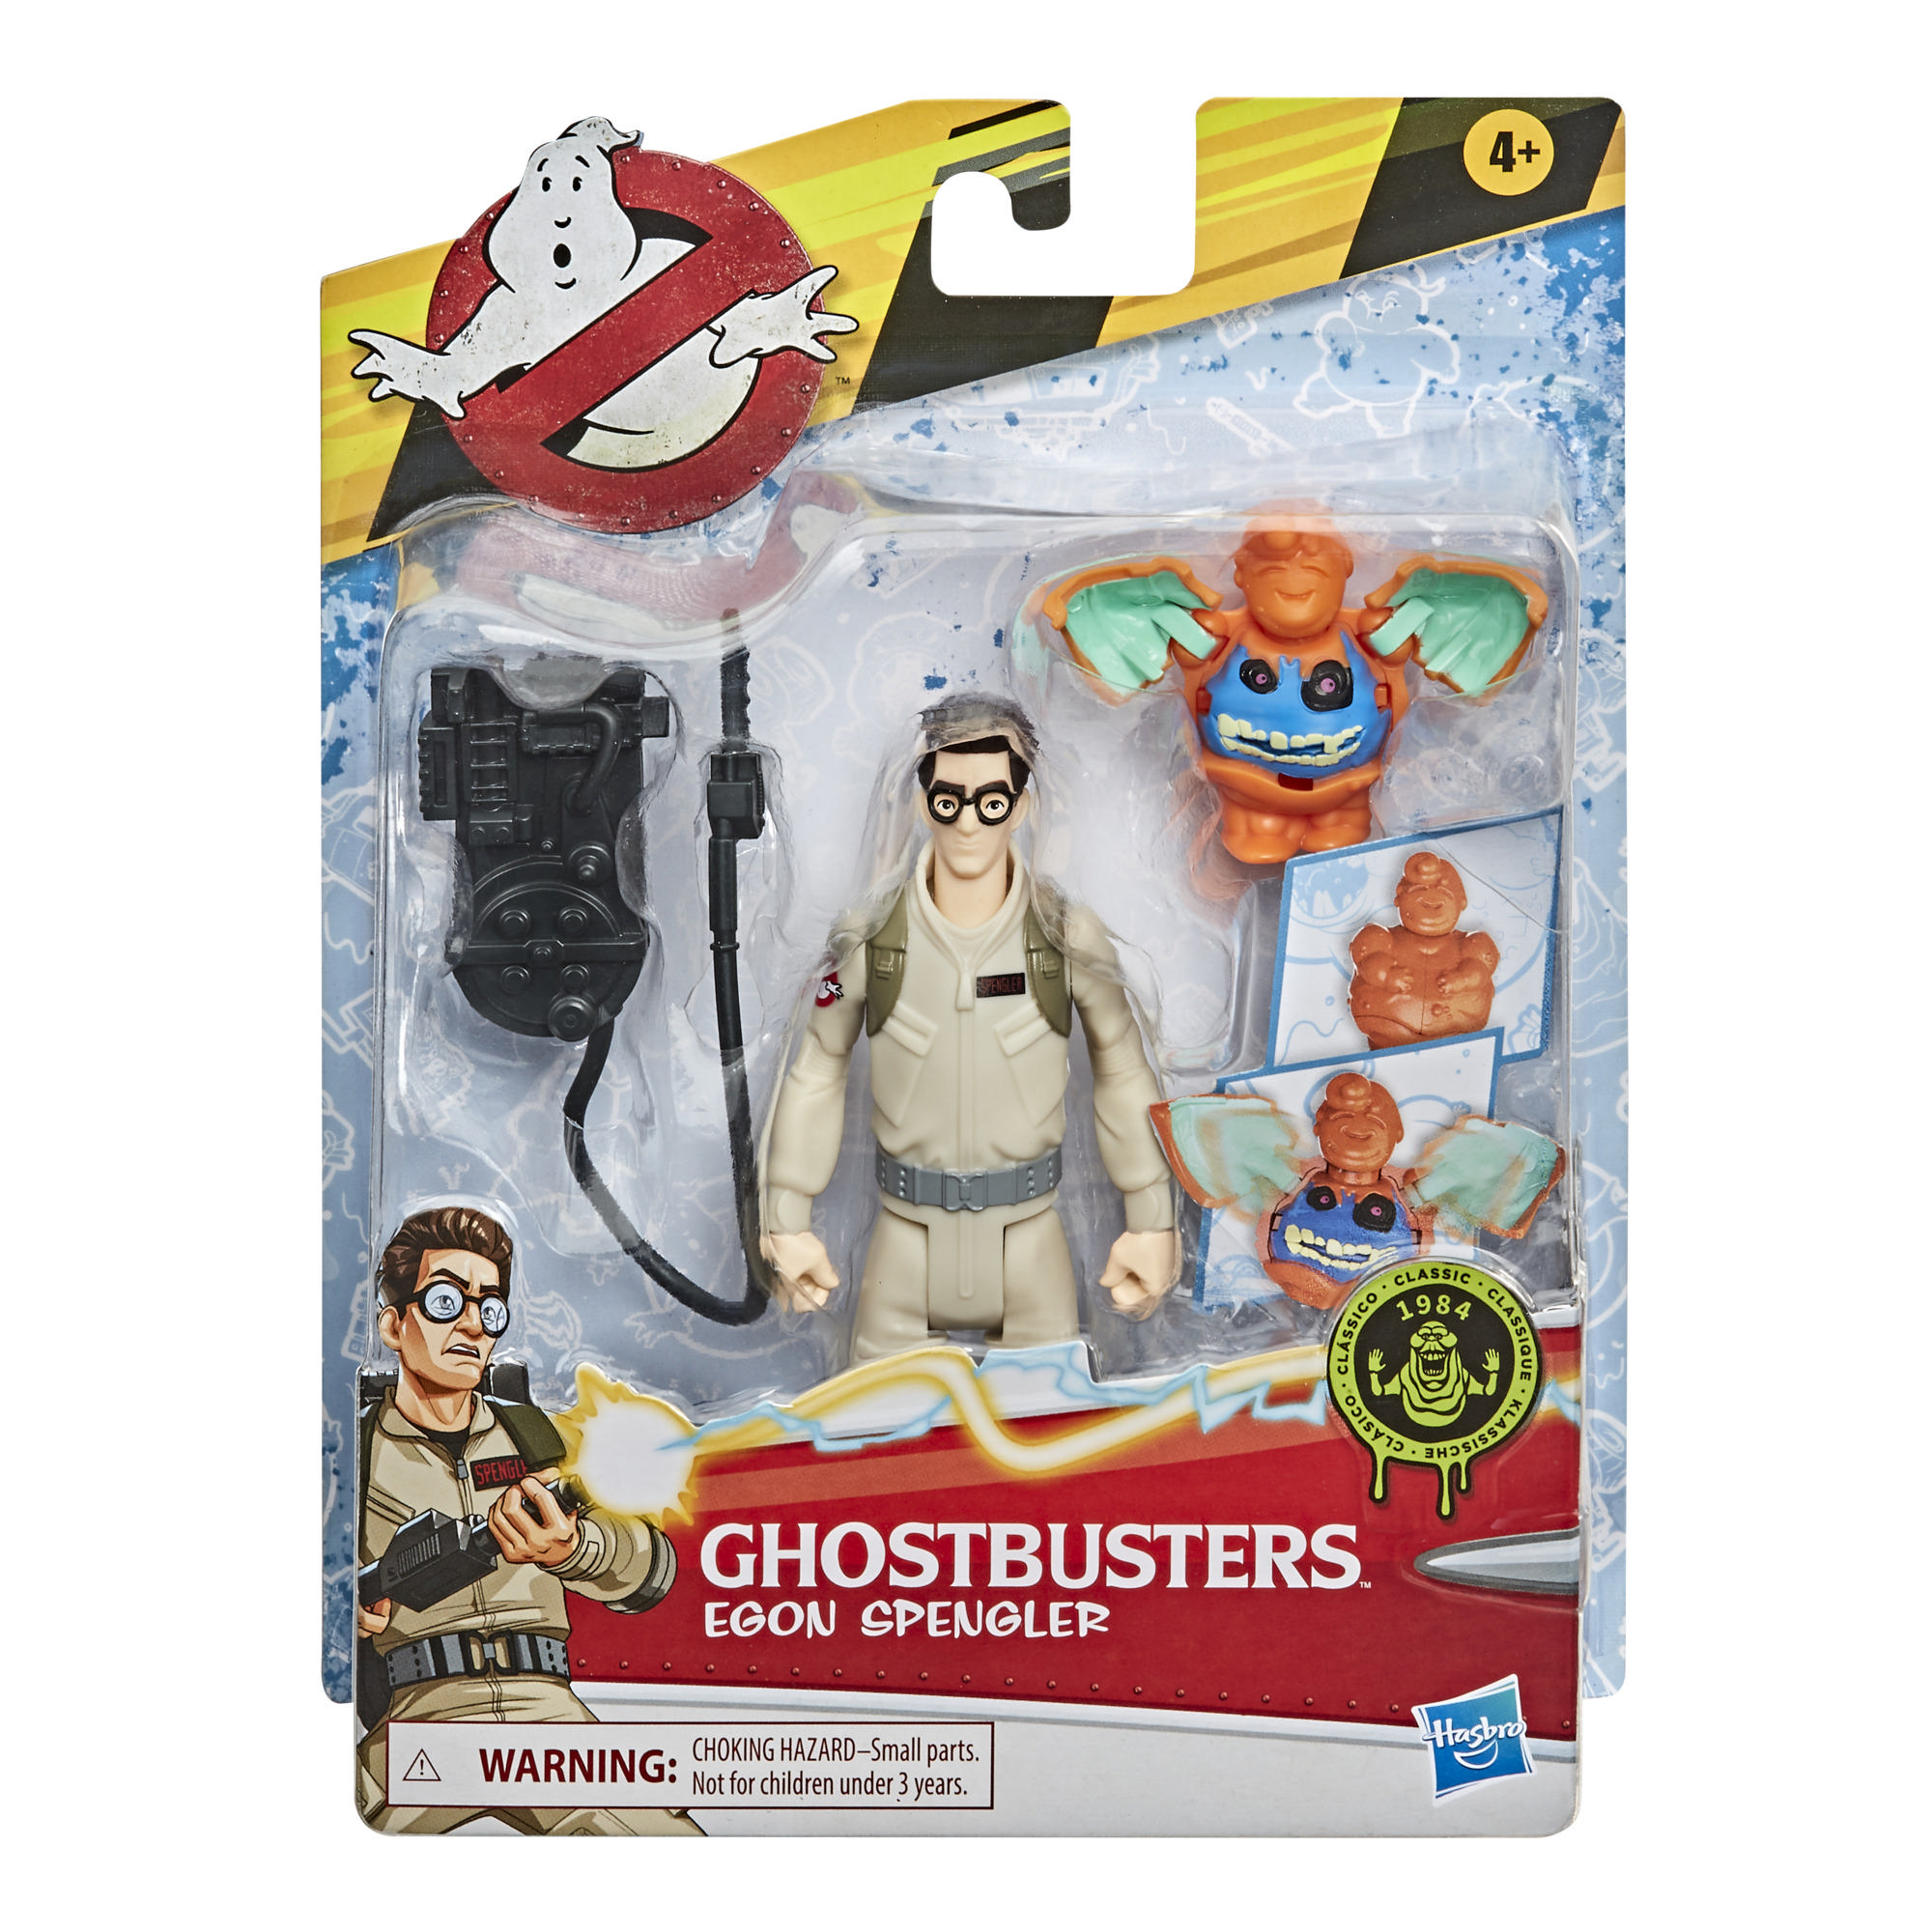 Ghostbusters Egon Spengler Fright Features Geisterschreck Action Figur Hasbro 